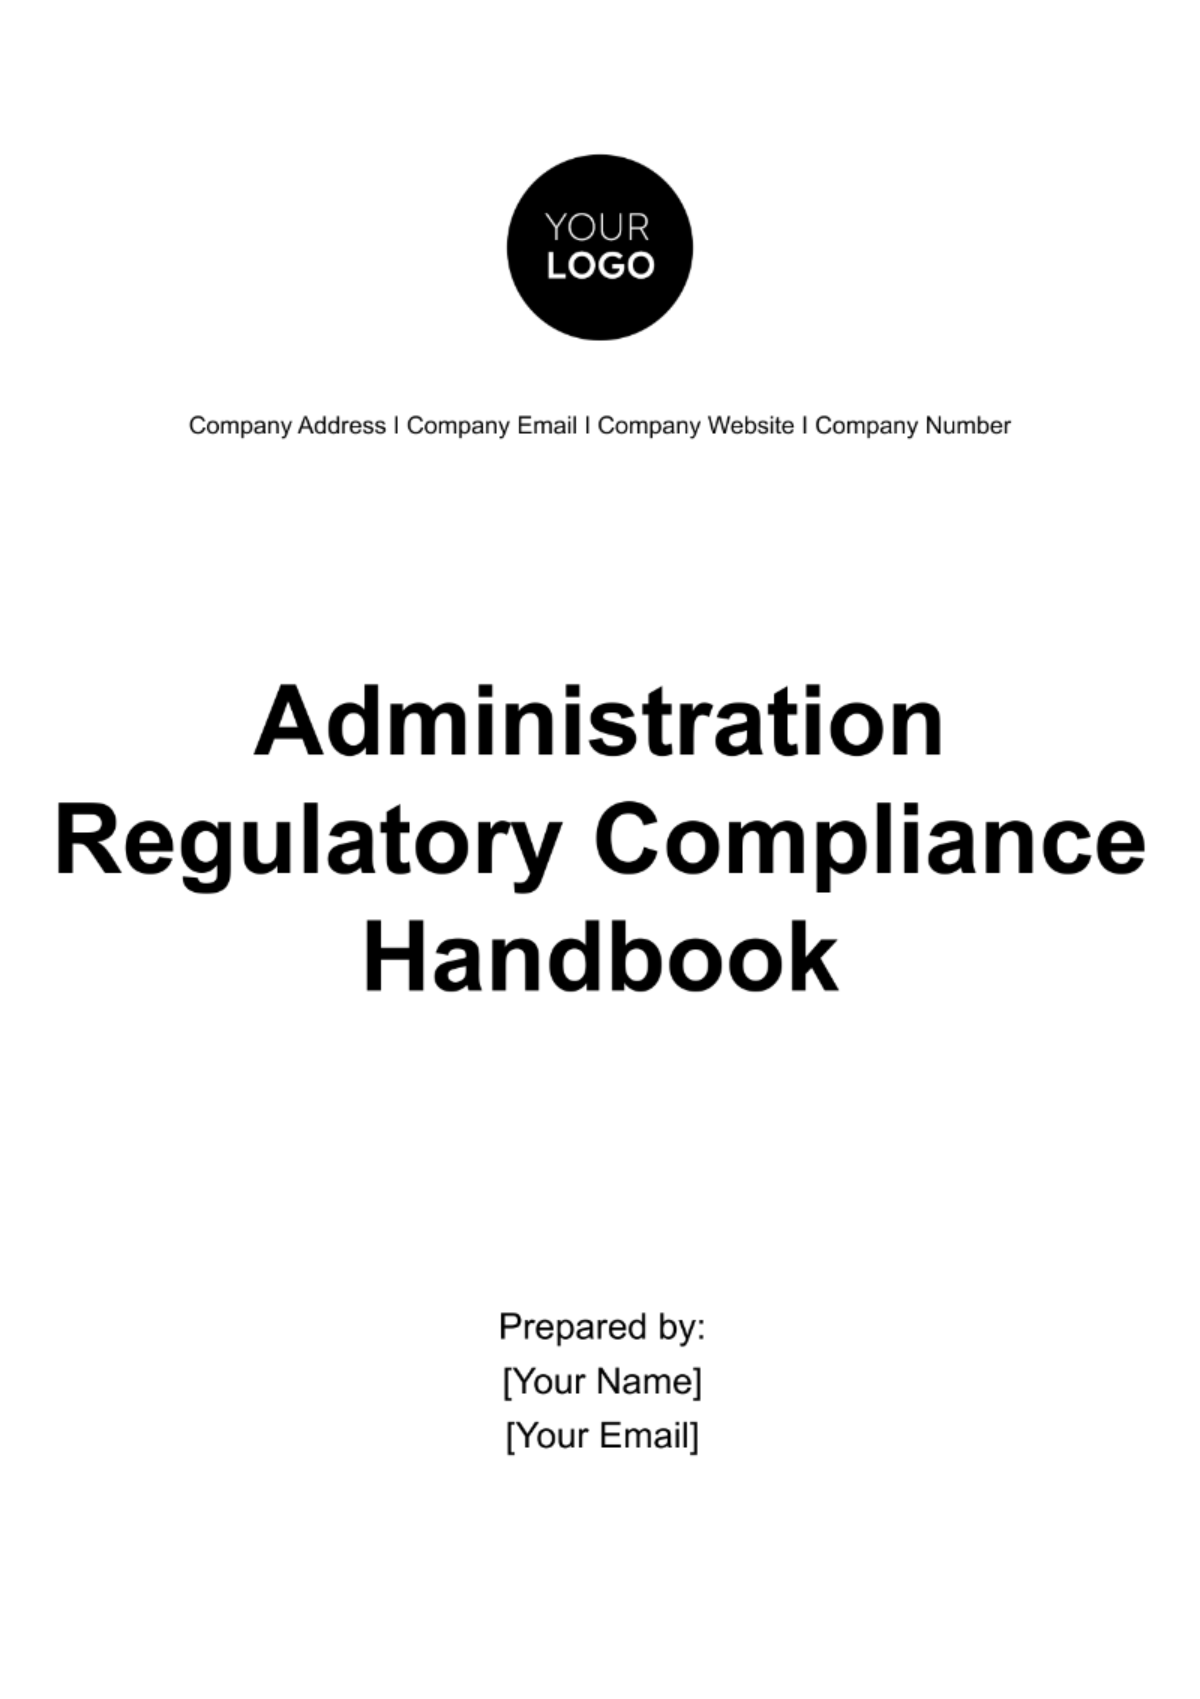 Free Administration Regulatory Compliance Handbook Template